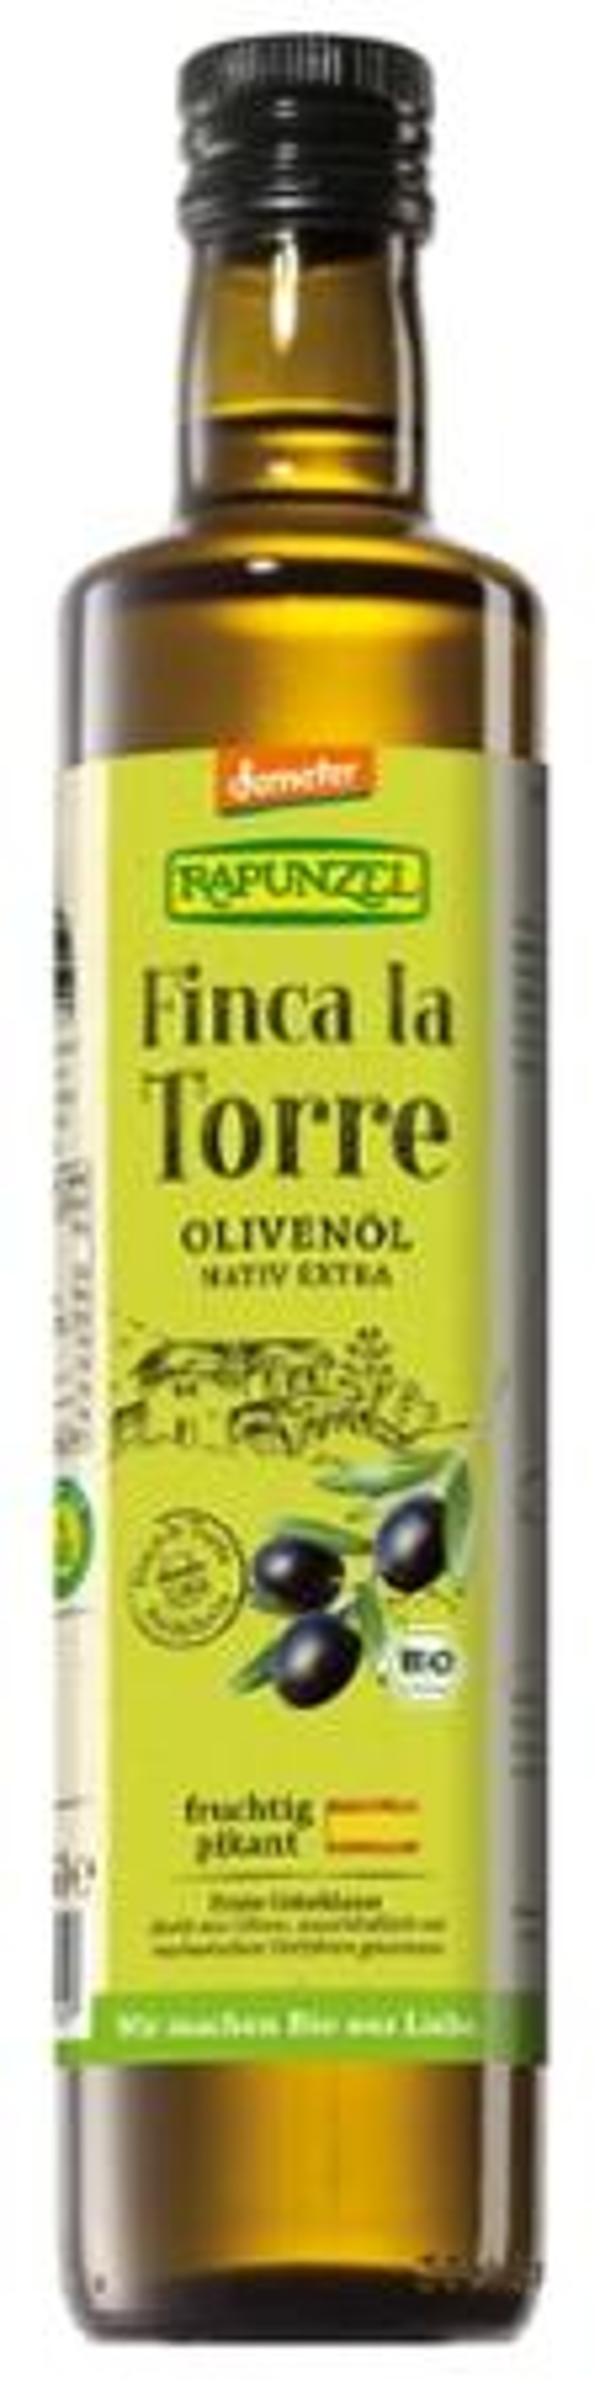 Produktfoto zu Olivenöl Finca la Torre 0,5 l